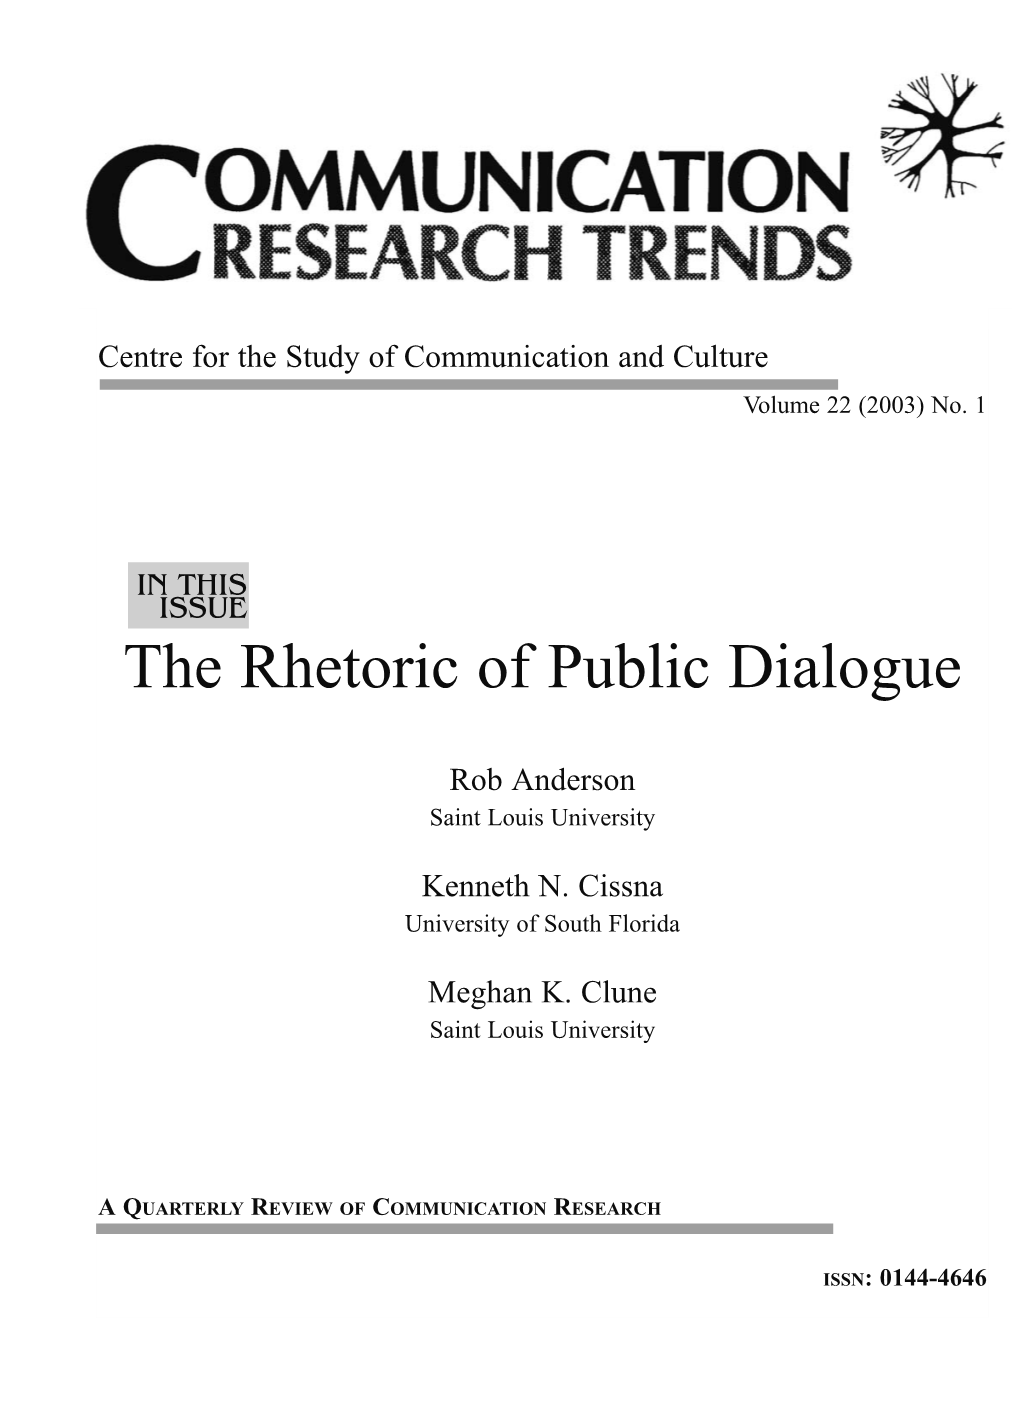 The Rhetoric of Public Dialogue